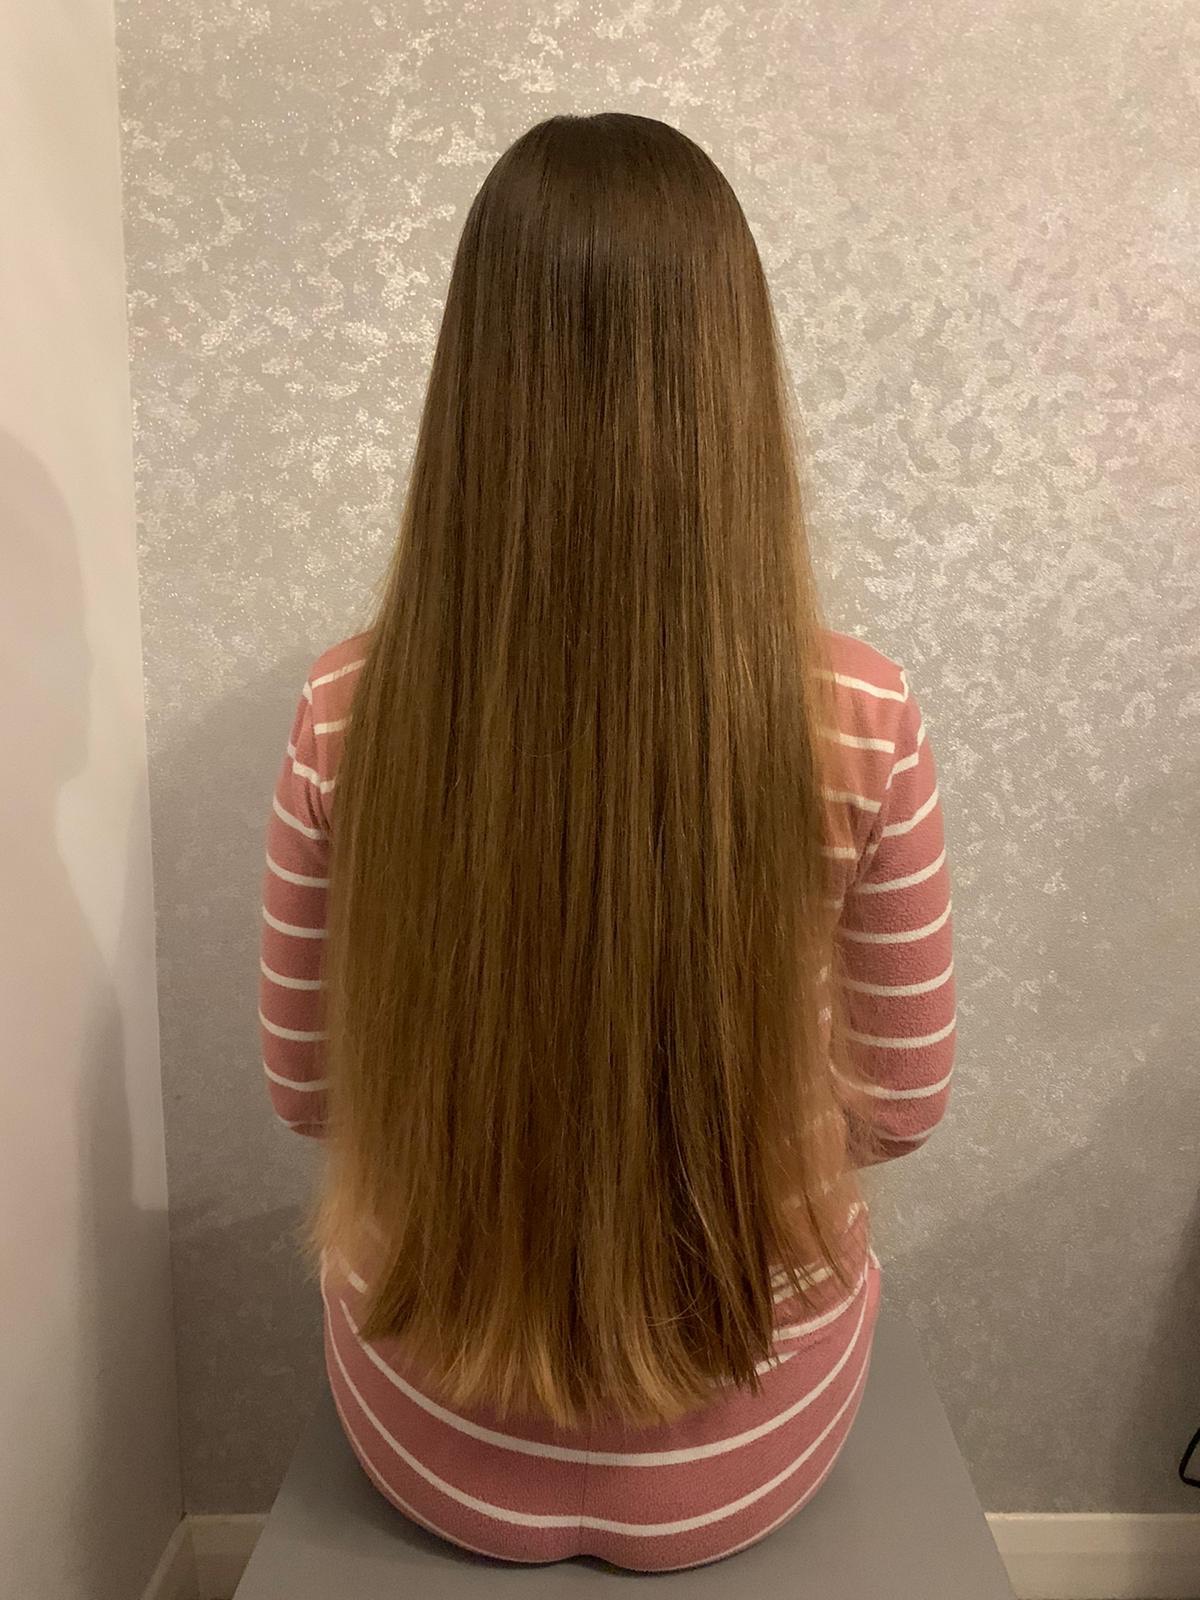 Courtney donates 10” of hair